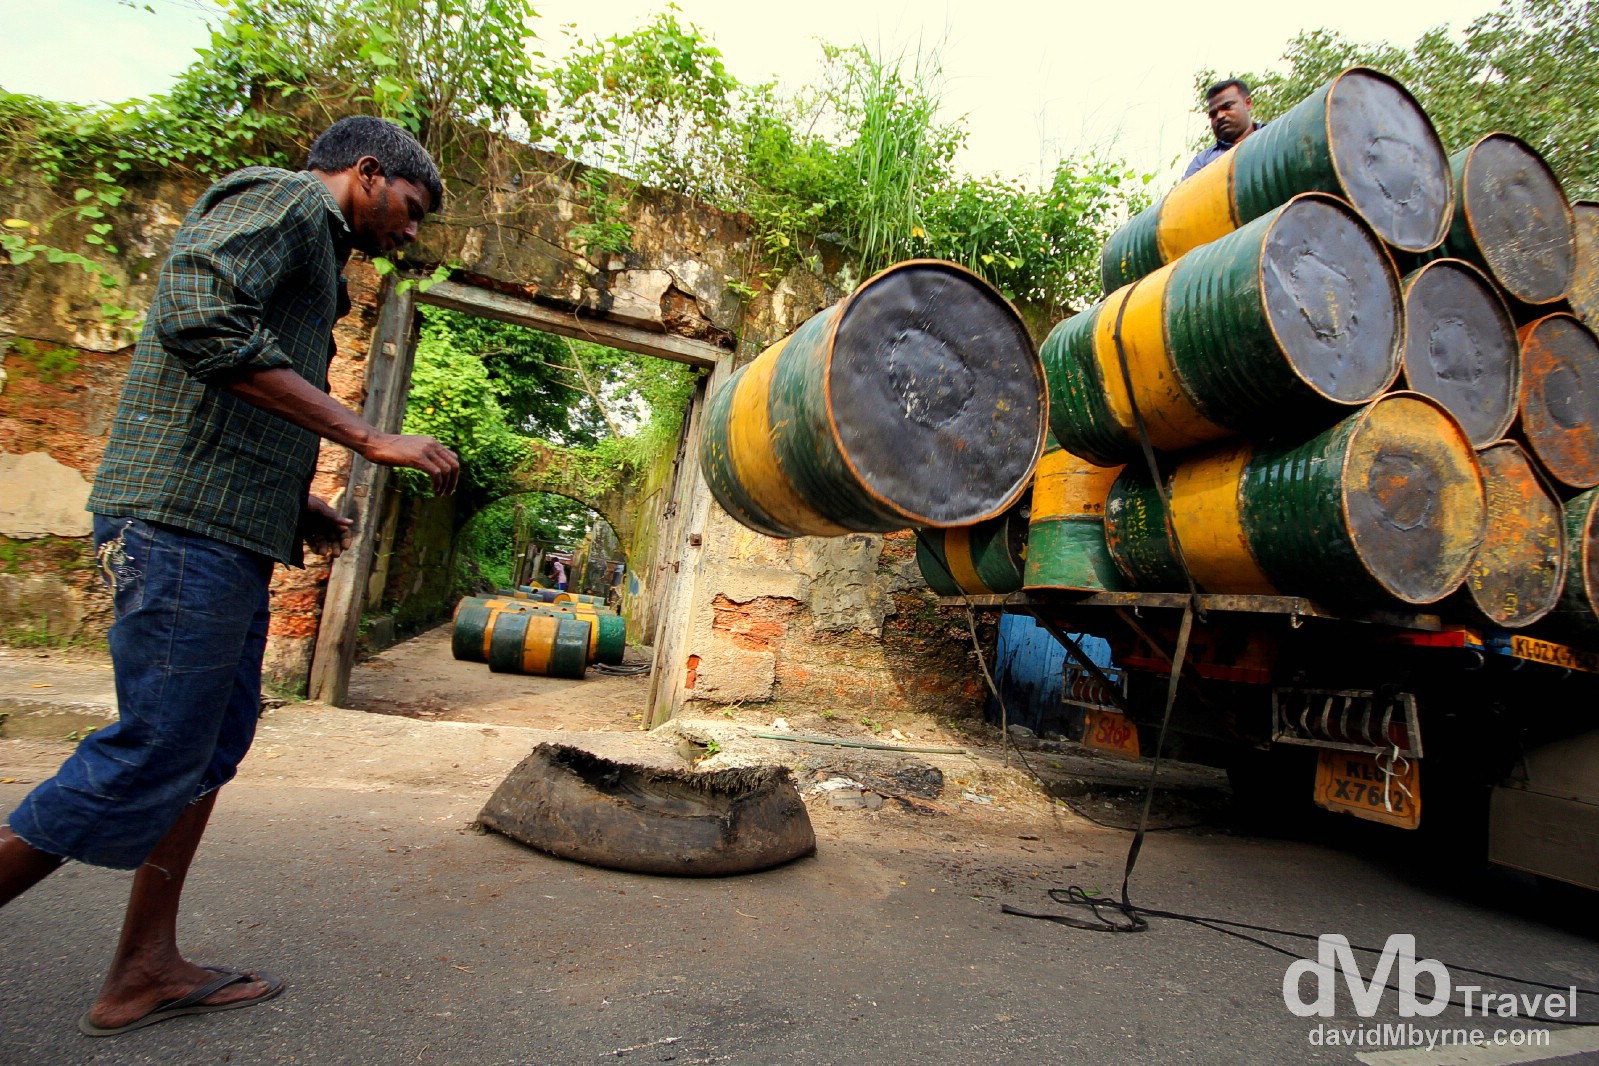 Unloading activities on Bazaar Road in Forth Cochin, Kerala, India. September 18th 2012.